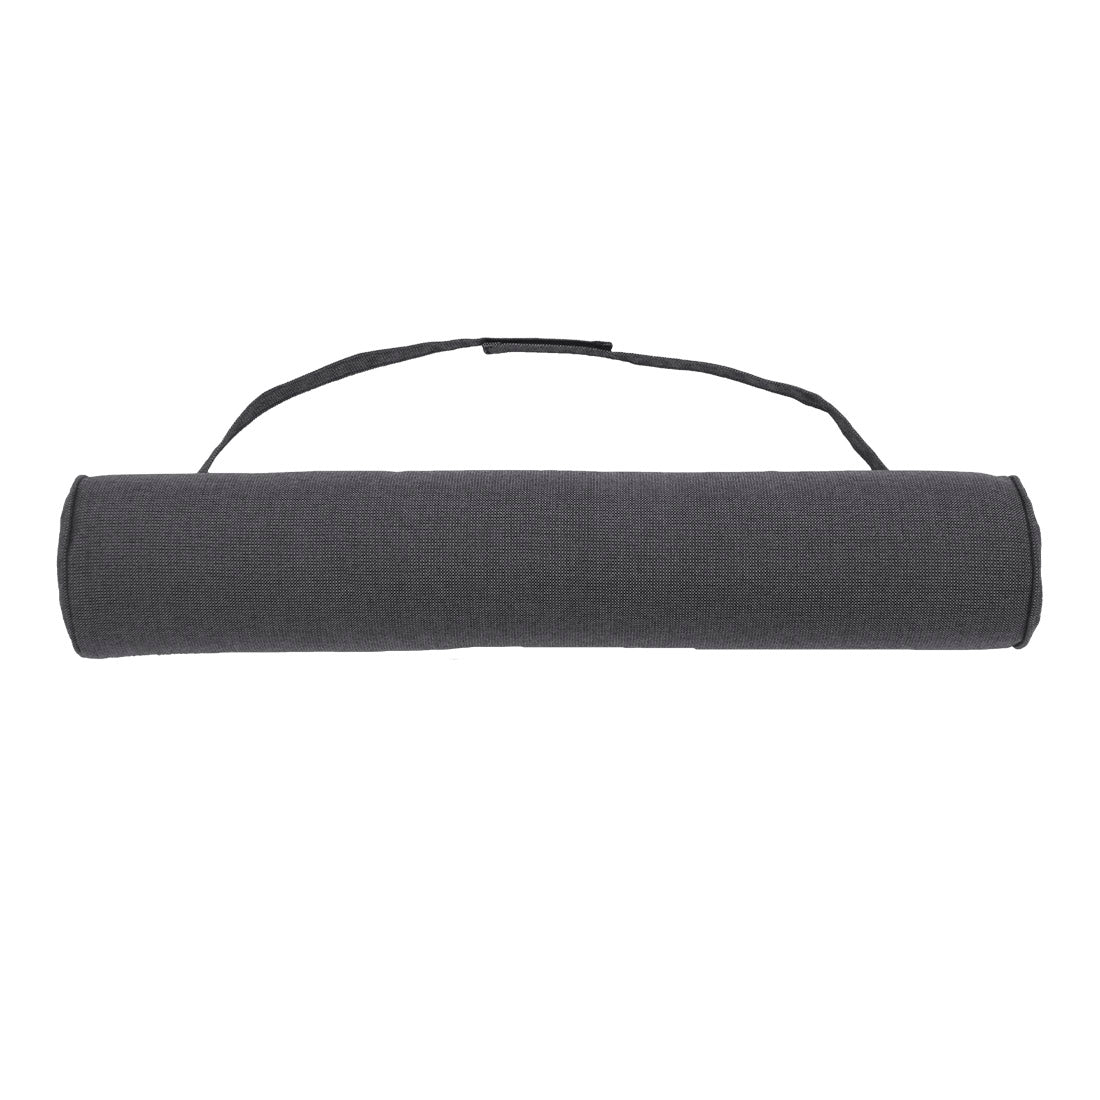 Fermob Bellevie Premium Sunlounger Headrest